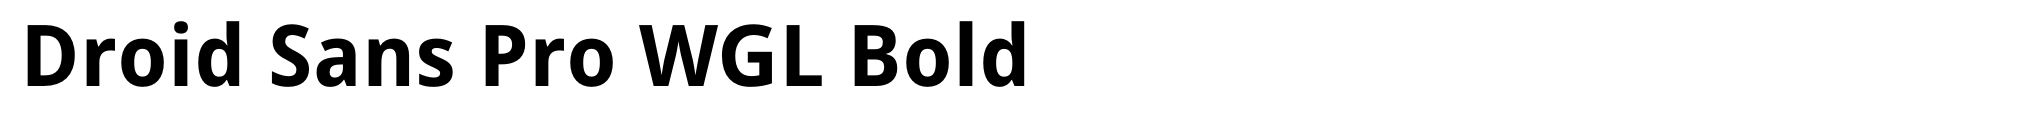 Droid Sans Pro WGL Bold image